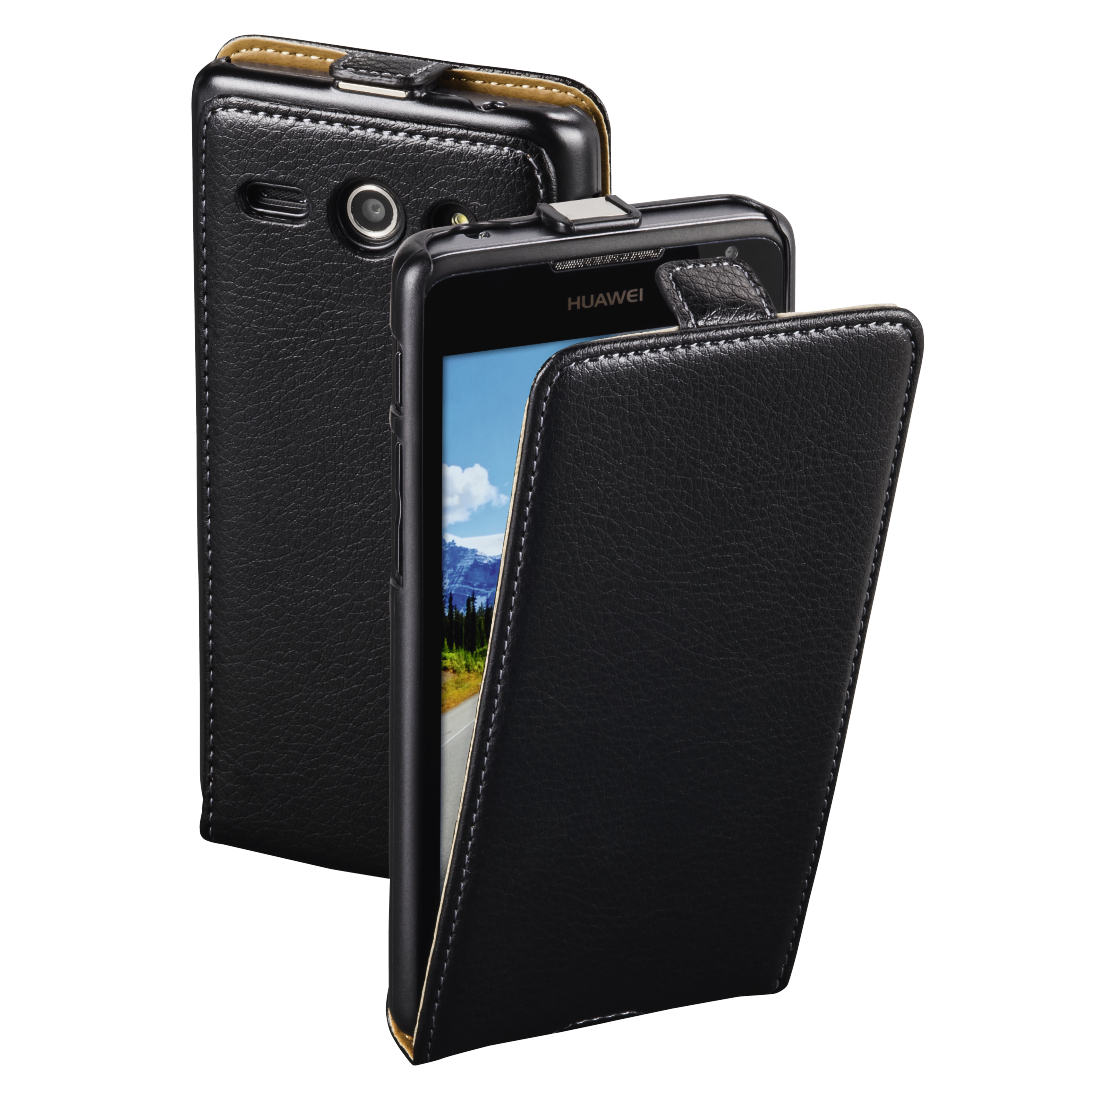 00091455 Hama "Smart Case" Flap Case for Huawei Ascend Y530, black